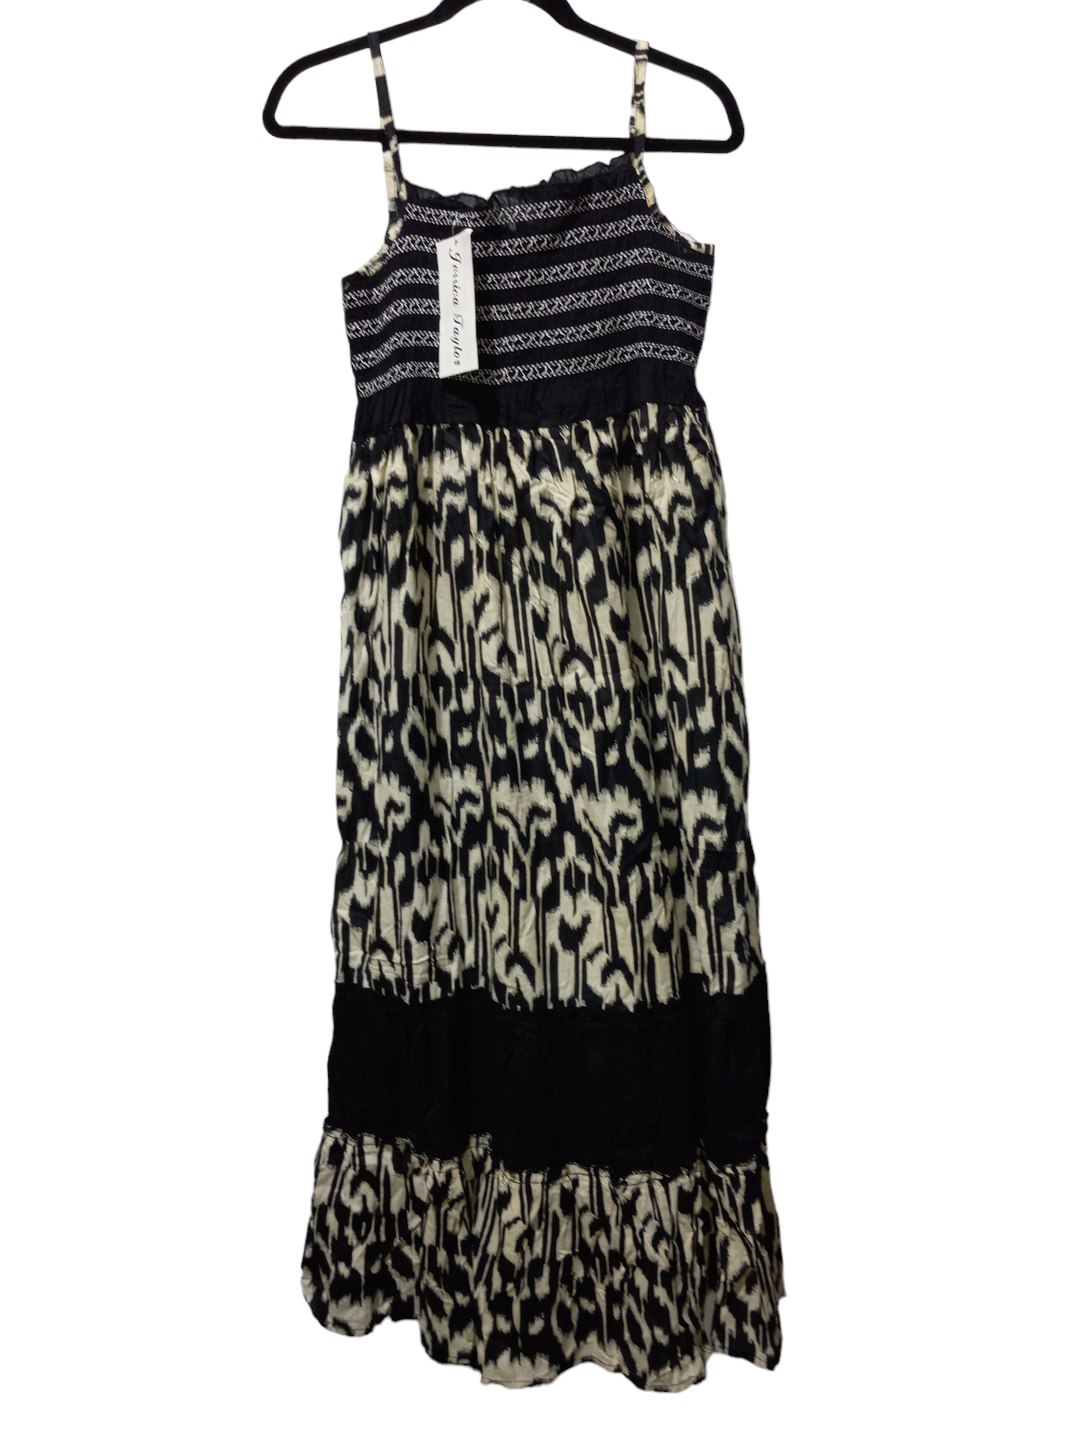 Black & Cream Dress Casual Maxi Clothes Mentor, Size 2x